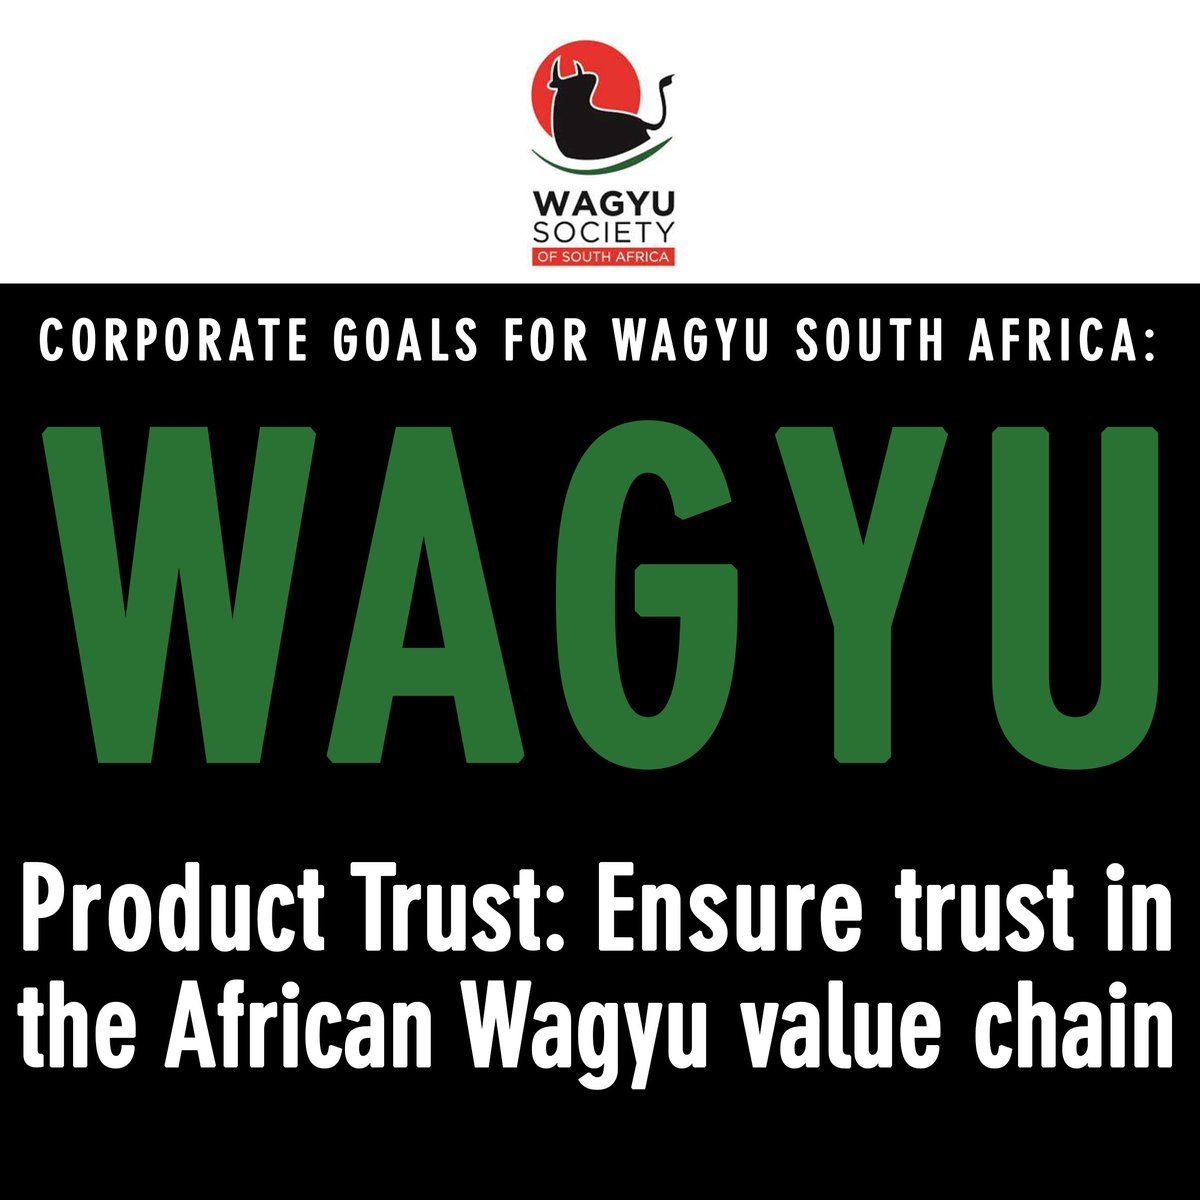 #wagyu #ilovesawagyu #corporategoals